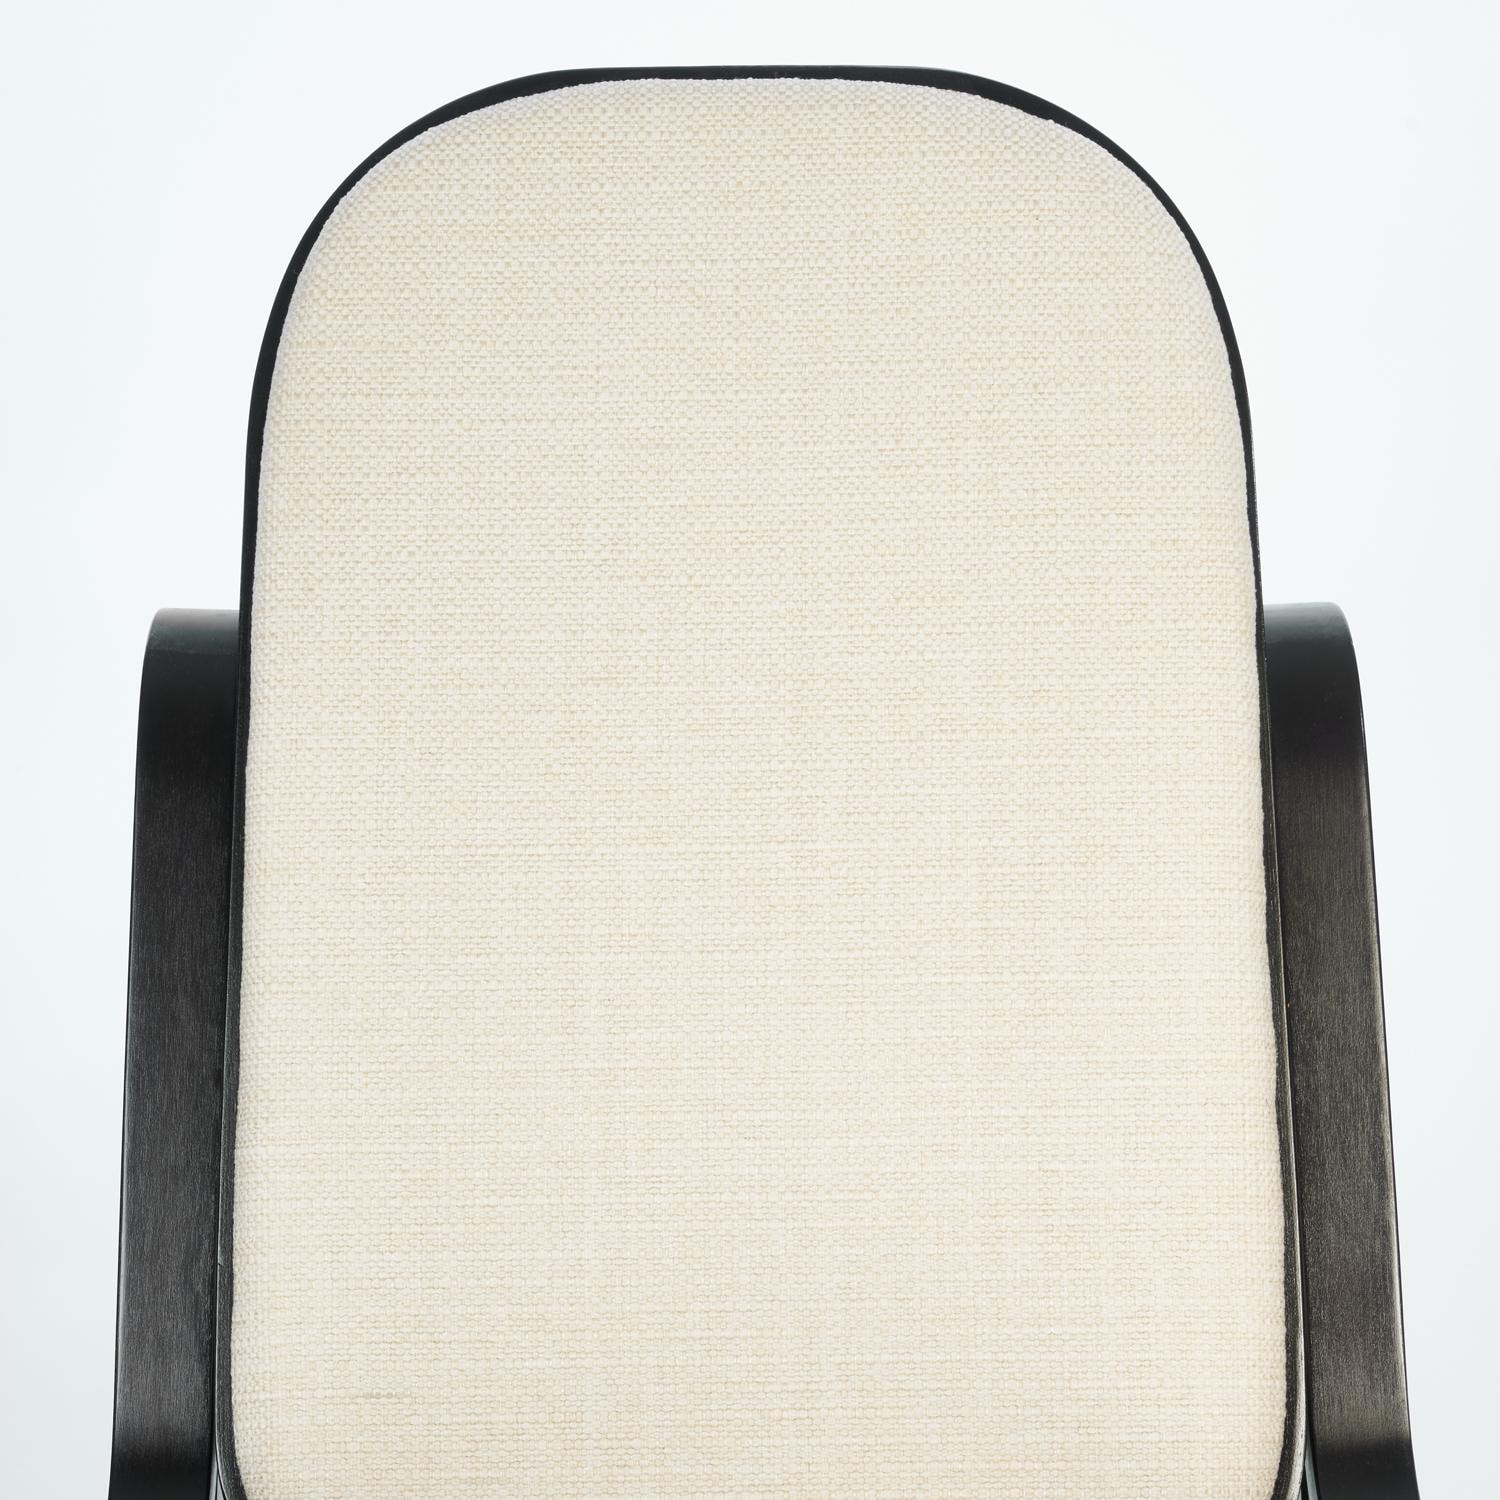 Кресло-качалка mod. AX3002-2 дерево береза, ткань: полиэстер/хлопок, 55х98х91 см, дерево: венге #9, ткань бежевая 1501-4